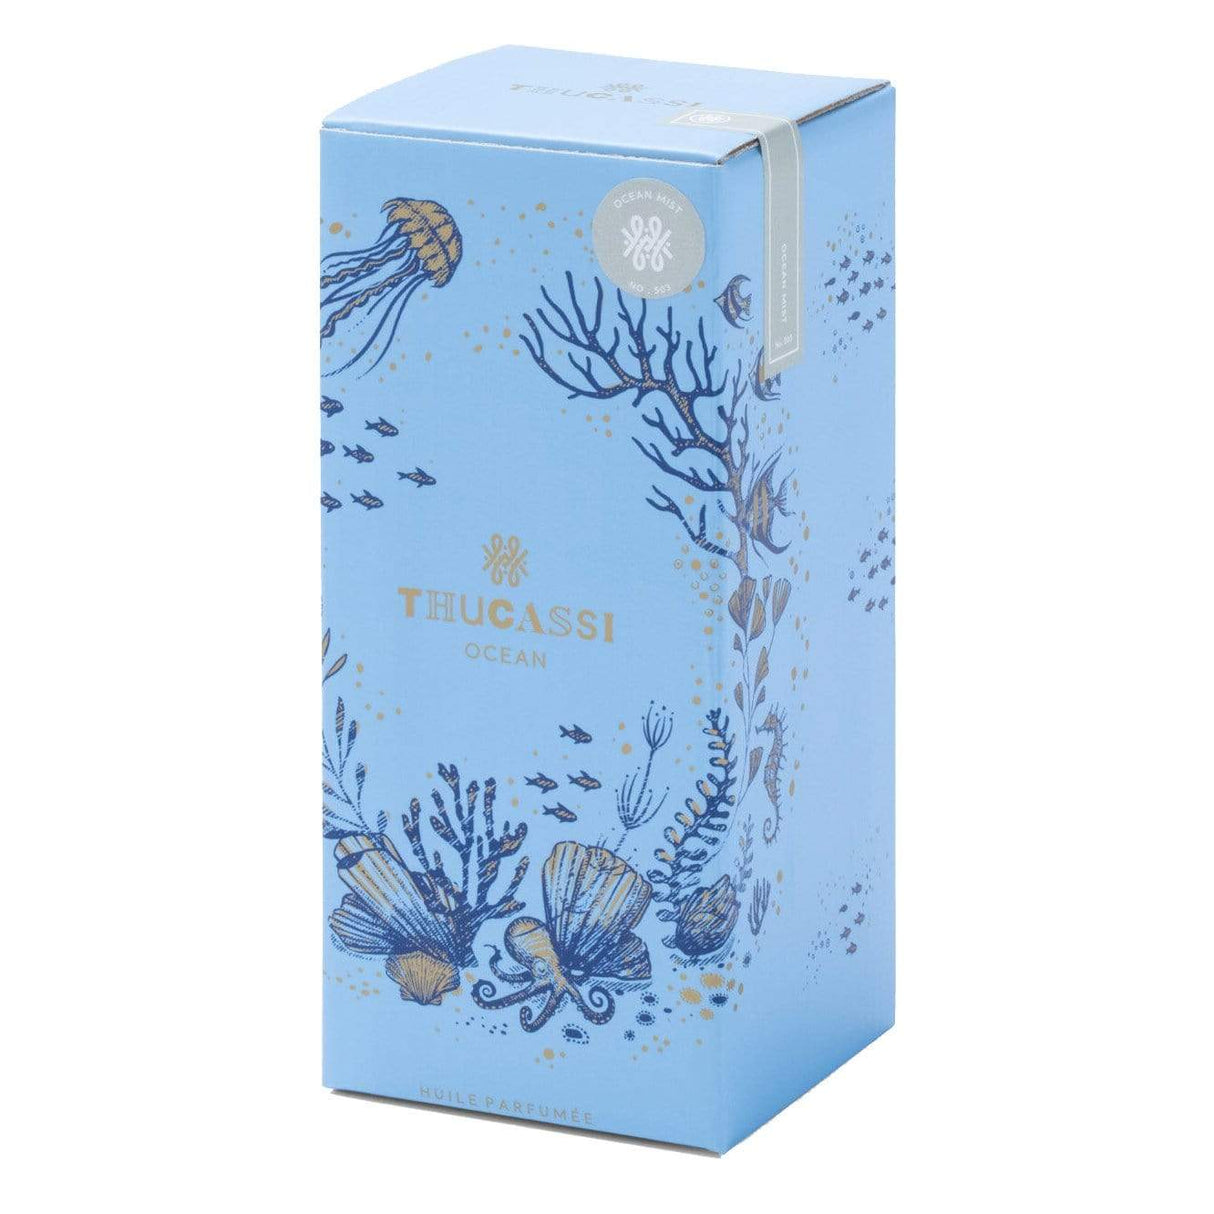 Thucassi Ocean Diffuser - Ocean Mist Candles thucassi-ocean-diffuser-ocean-mist-270-ml